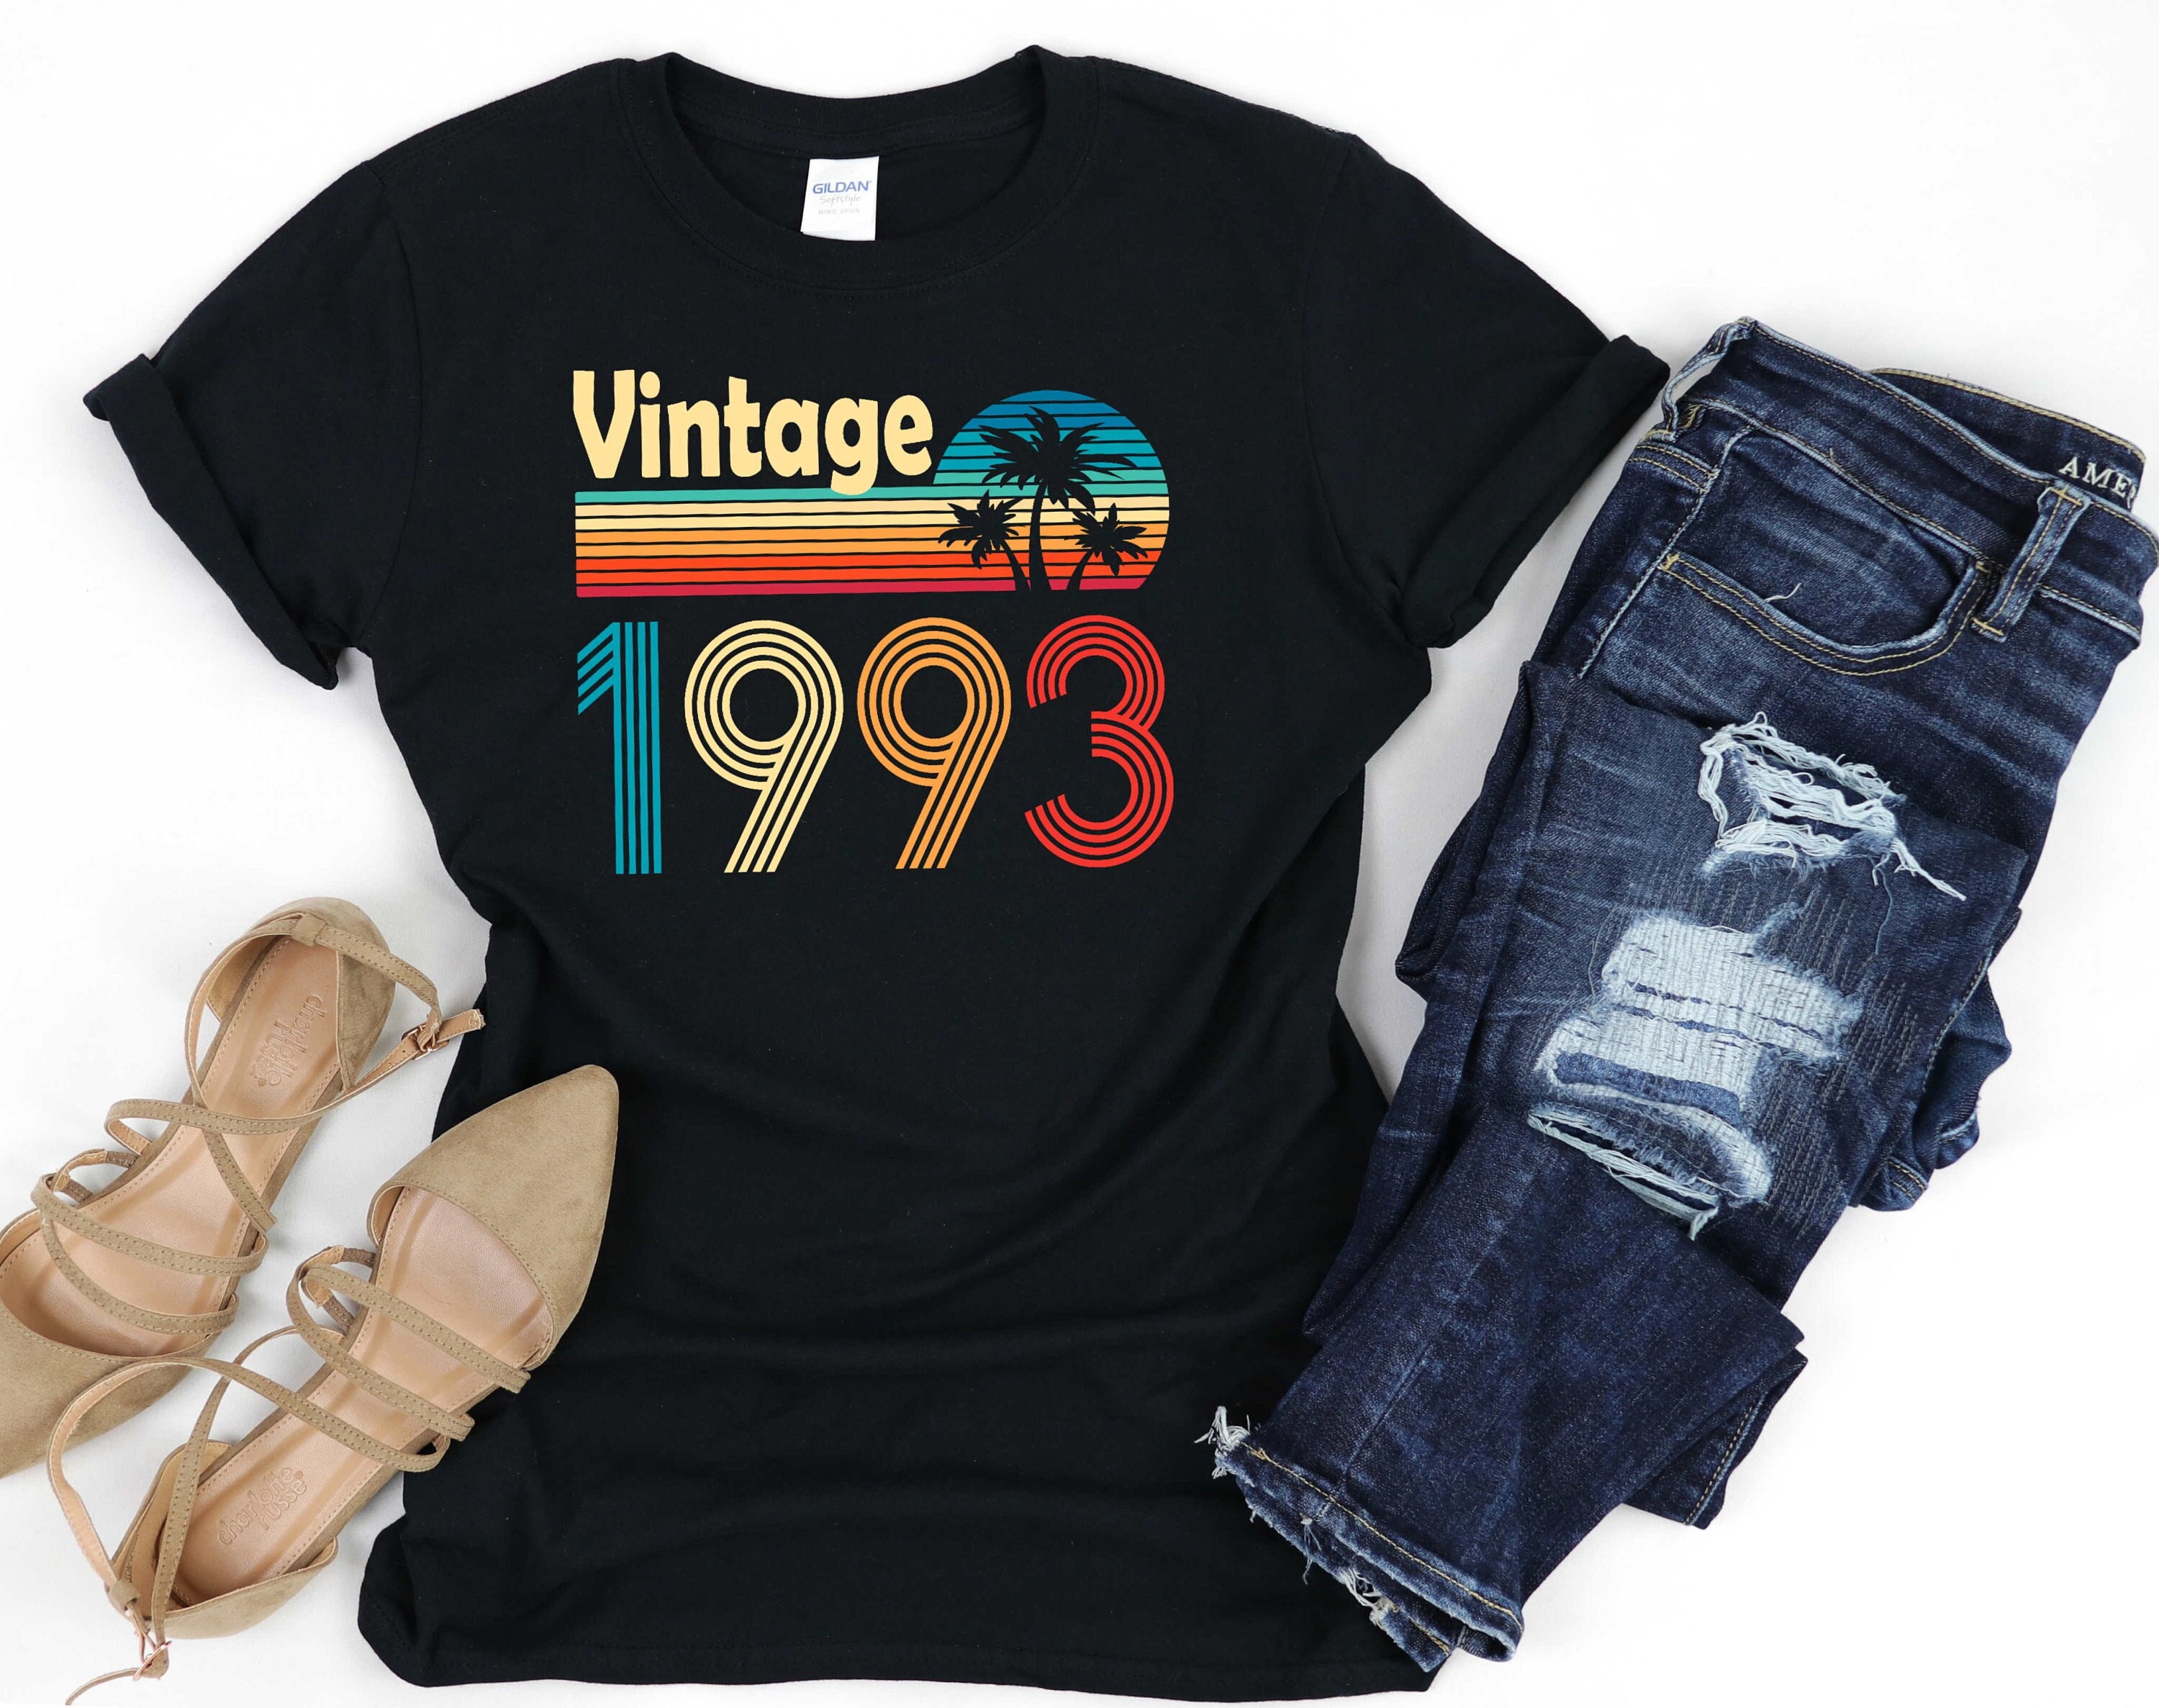 30th Birthday Shirt, Vintage 1993 Shirt, Thirty Birthday Shirt, 30th Birthday Gift